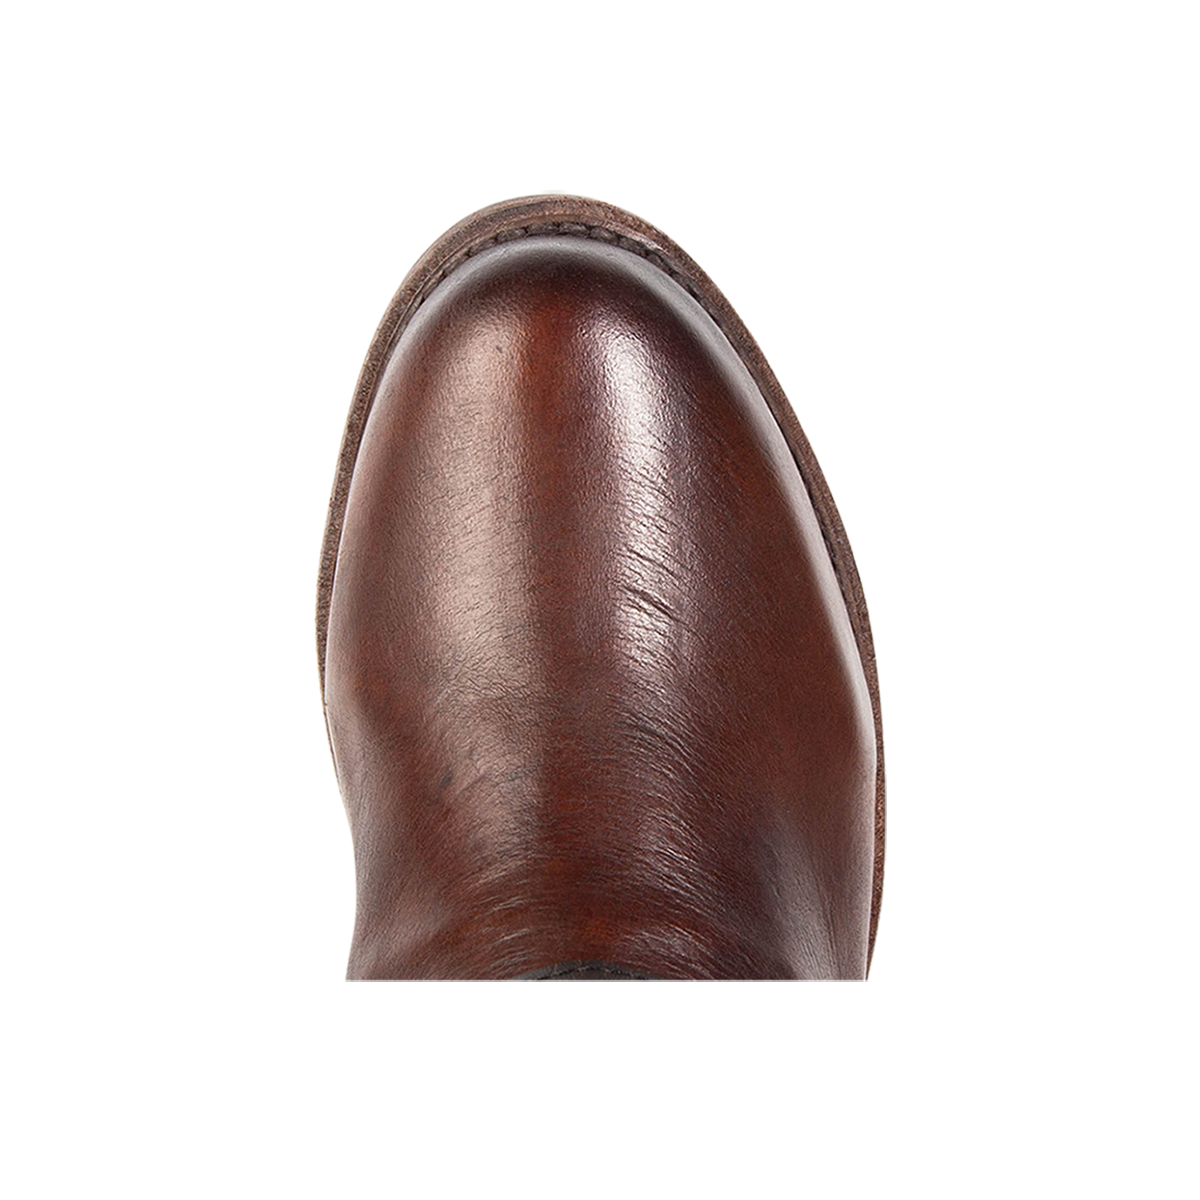 Top view showing round toe construction on FREEBIRD women's Rylan cognac multi boot